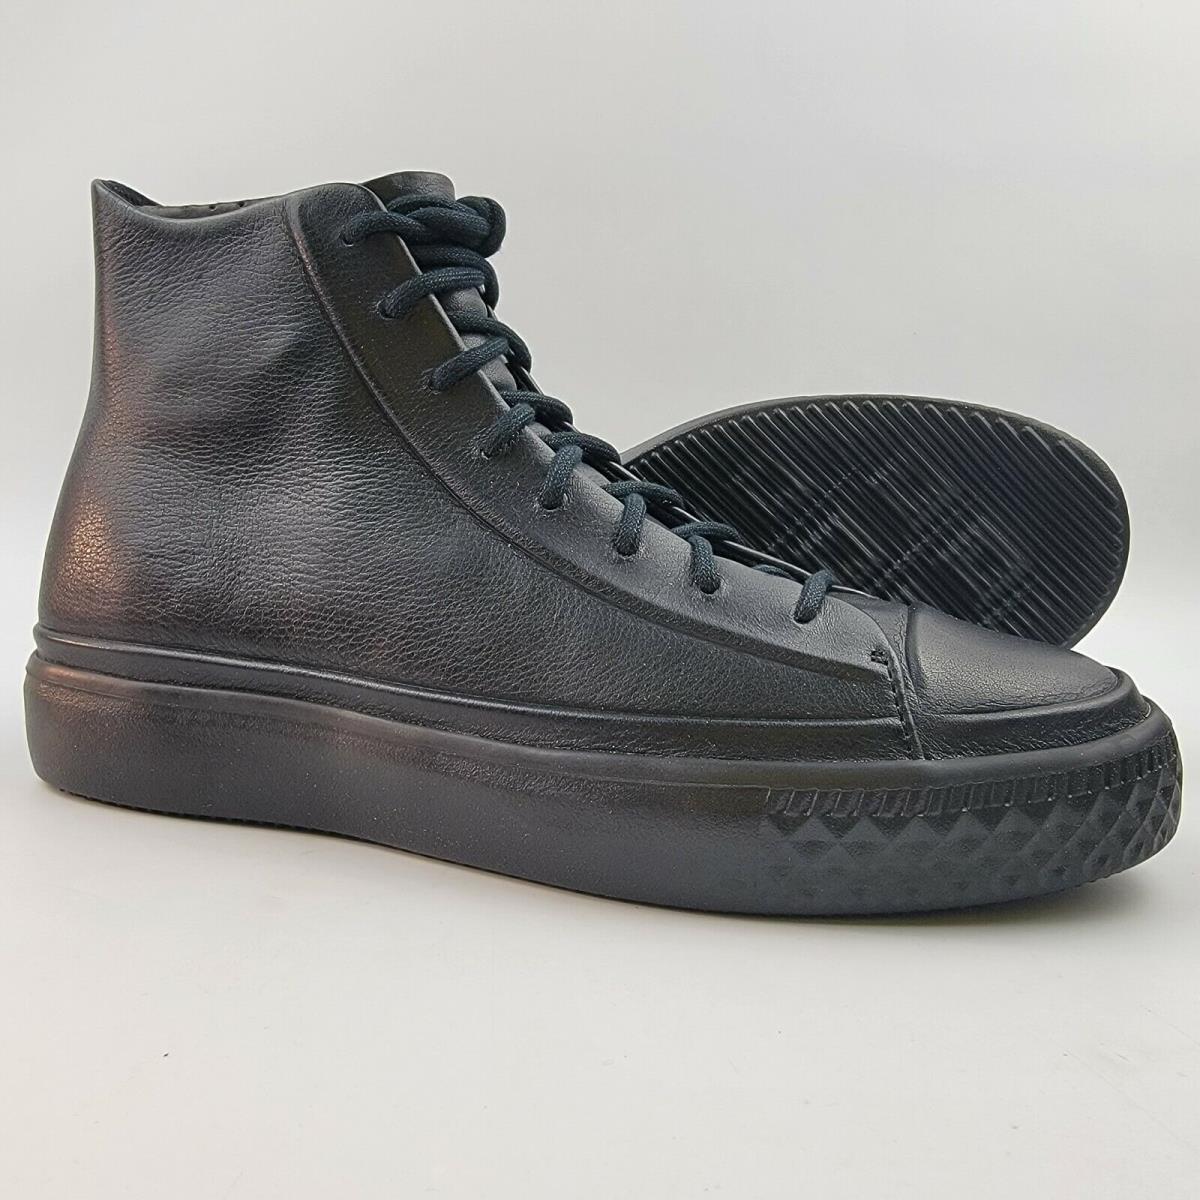 Converse Chuck Taylor All Star Modern Hi Leather Shoes Black 156638C Mens 10